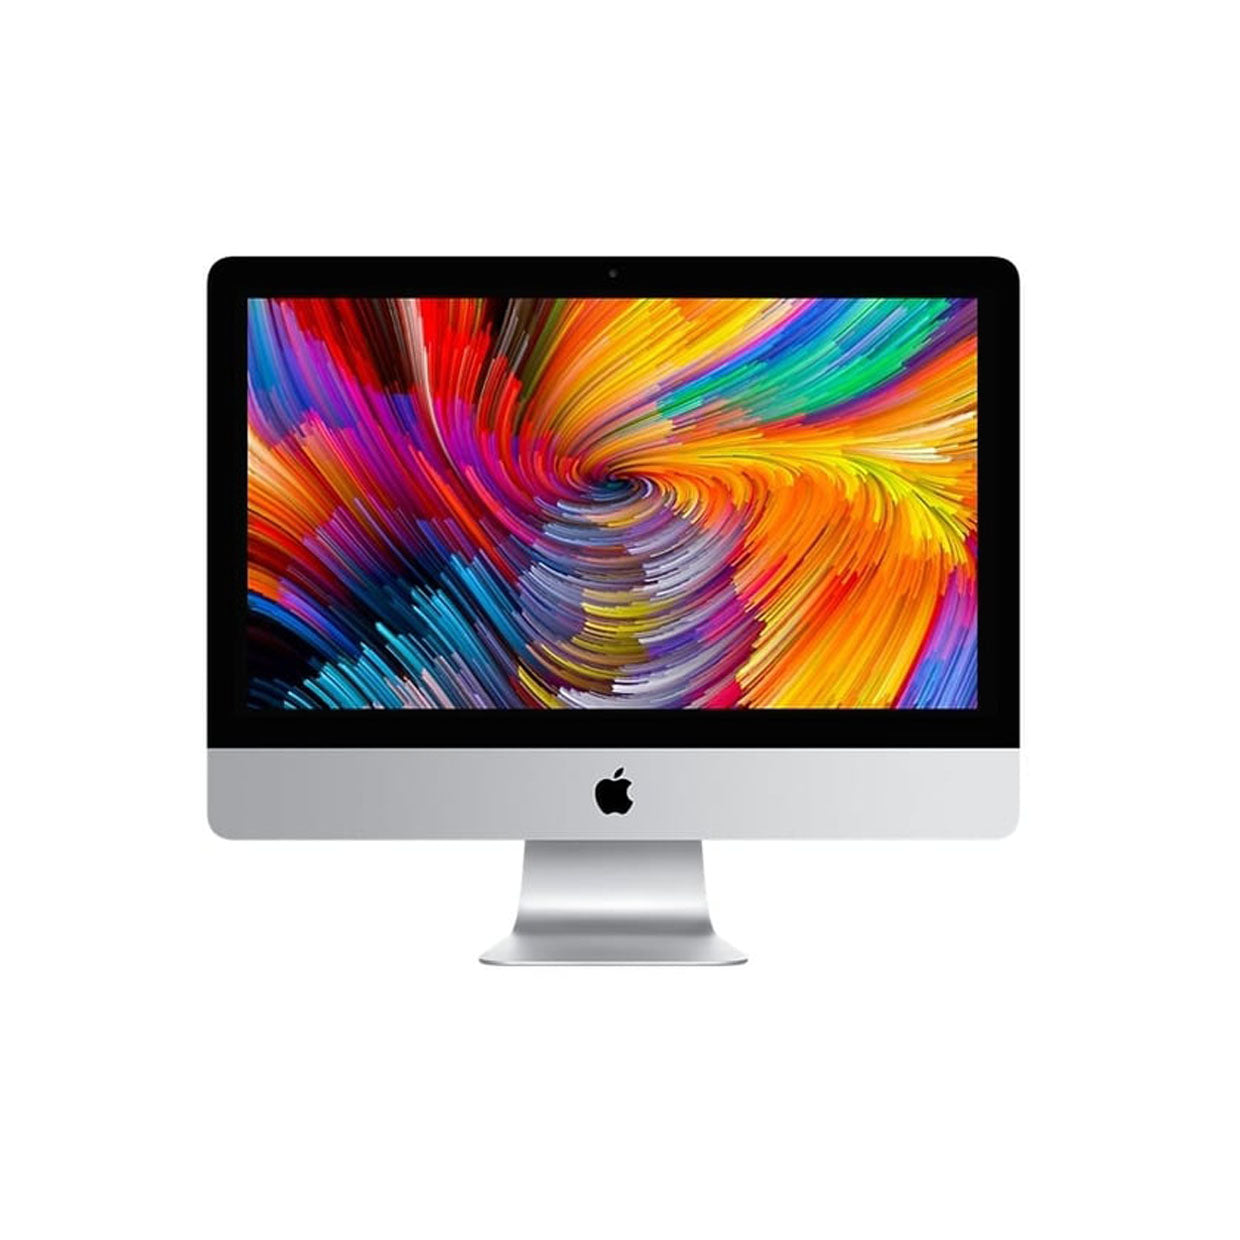 iMac Retina 4K 21.5-inch (2017) – Core i5 3.0GHz 8GB 1TB 2GB 